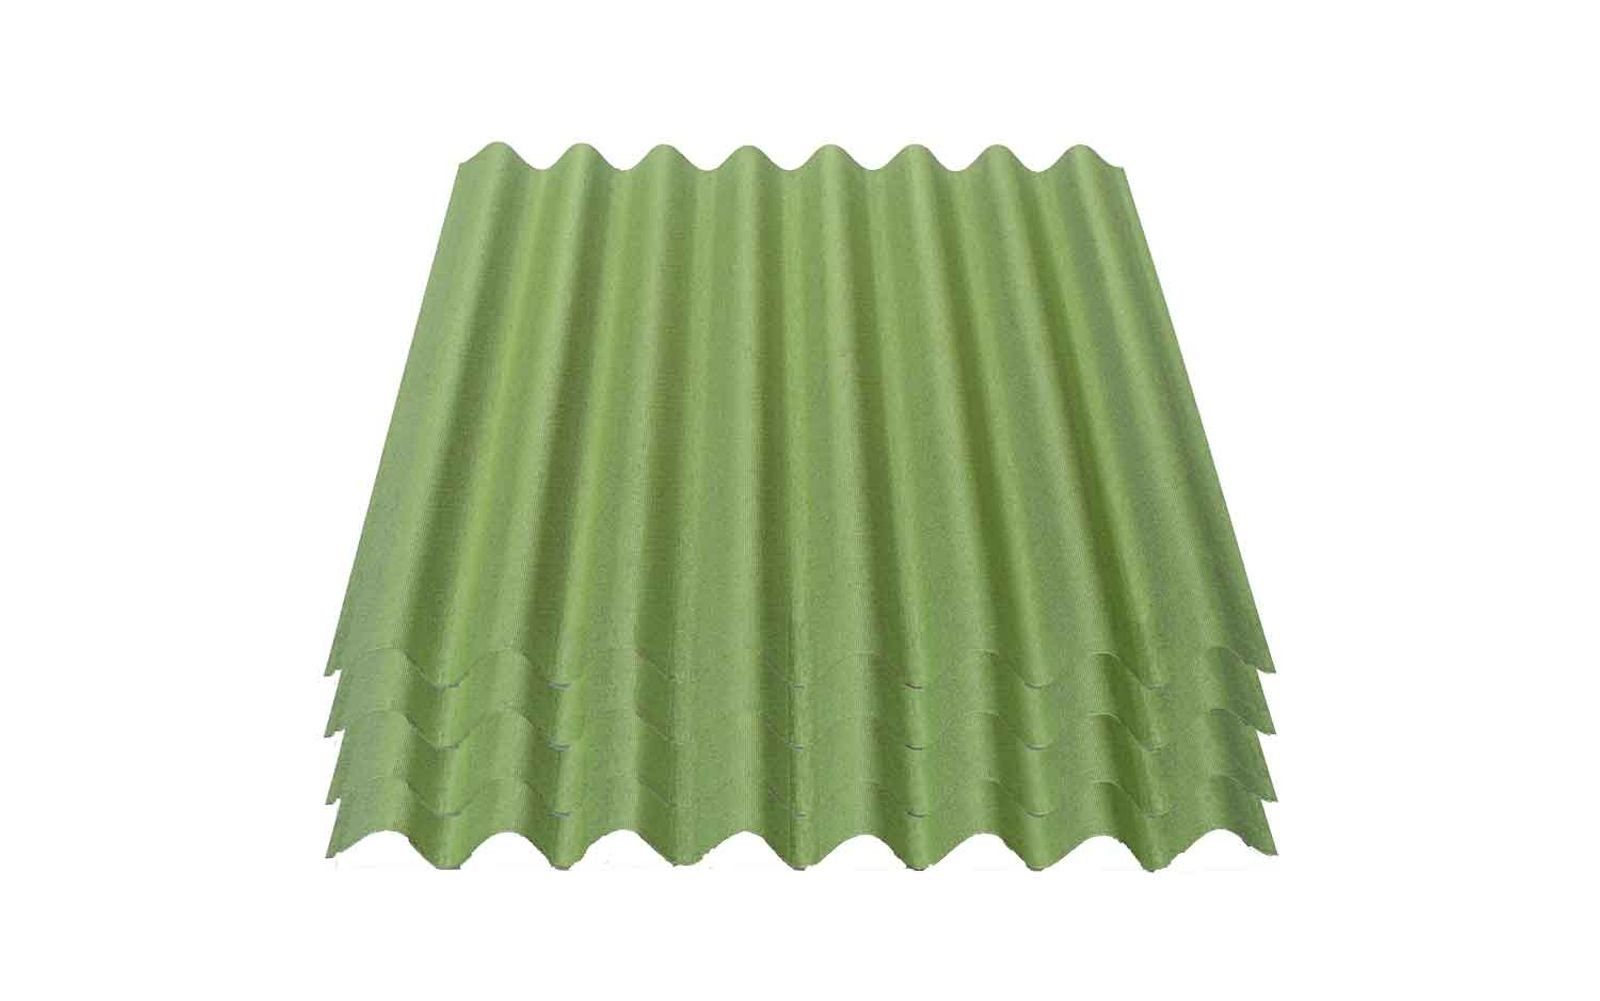 Onduline Dachpappe Onduline Easyline Dachplatte Wandplatte Bitumenwellplatten Wellplatte 4x0,76m² - grün, wellig, 3.04 m² pro Paket, (4-St)